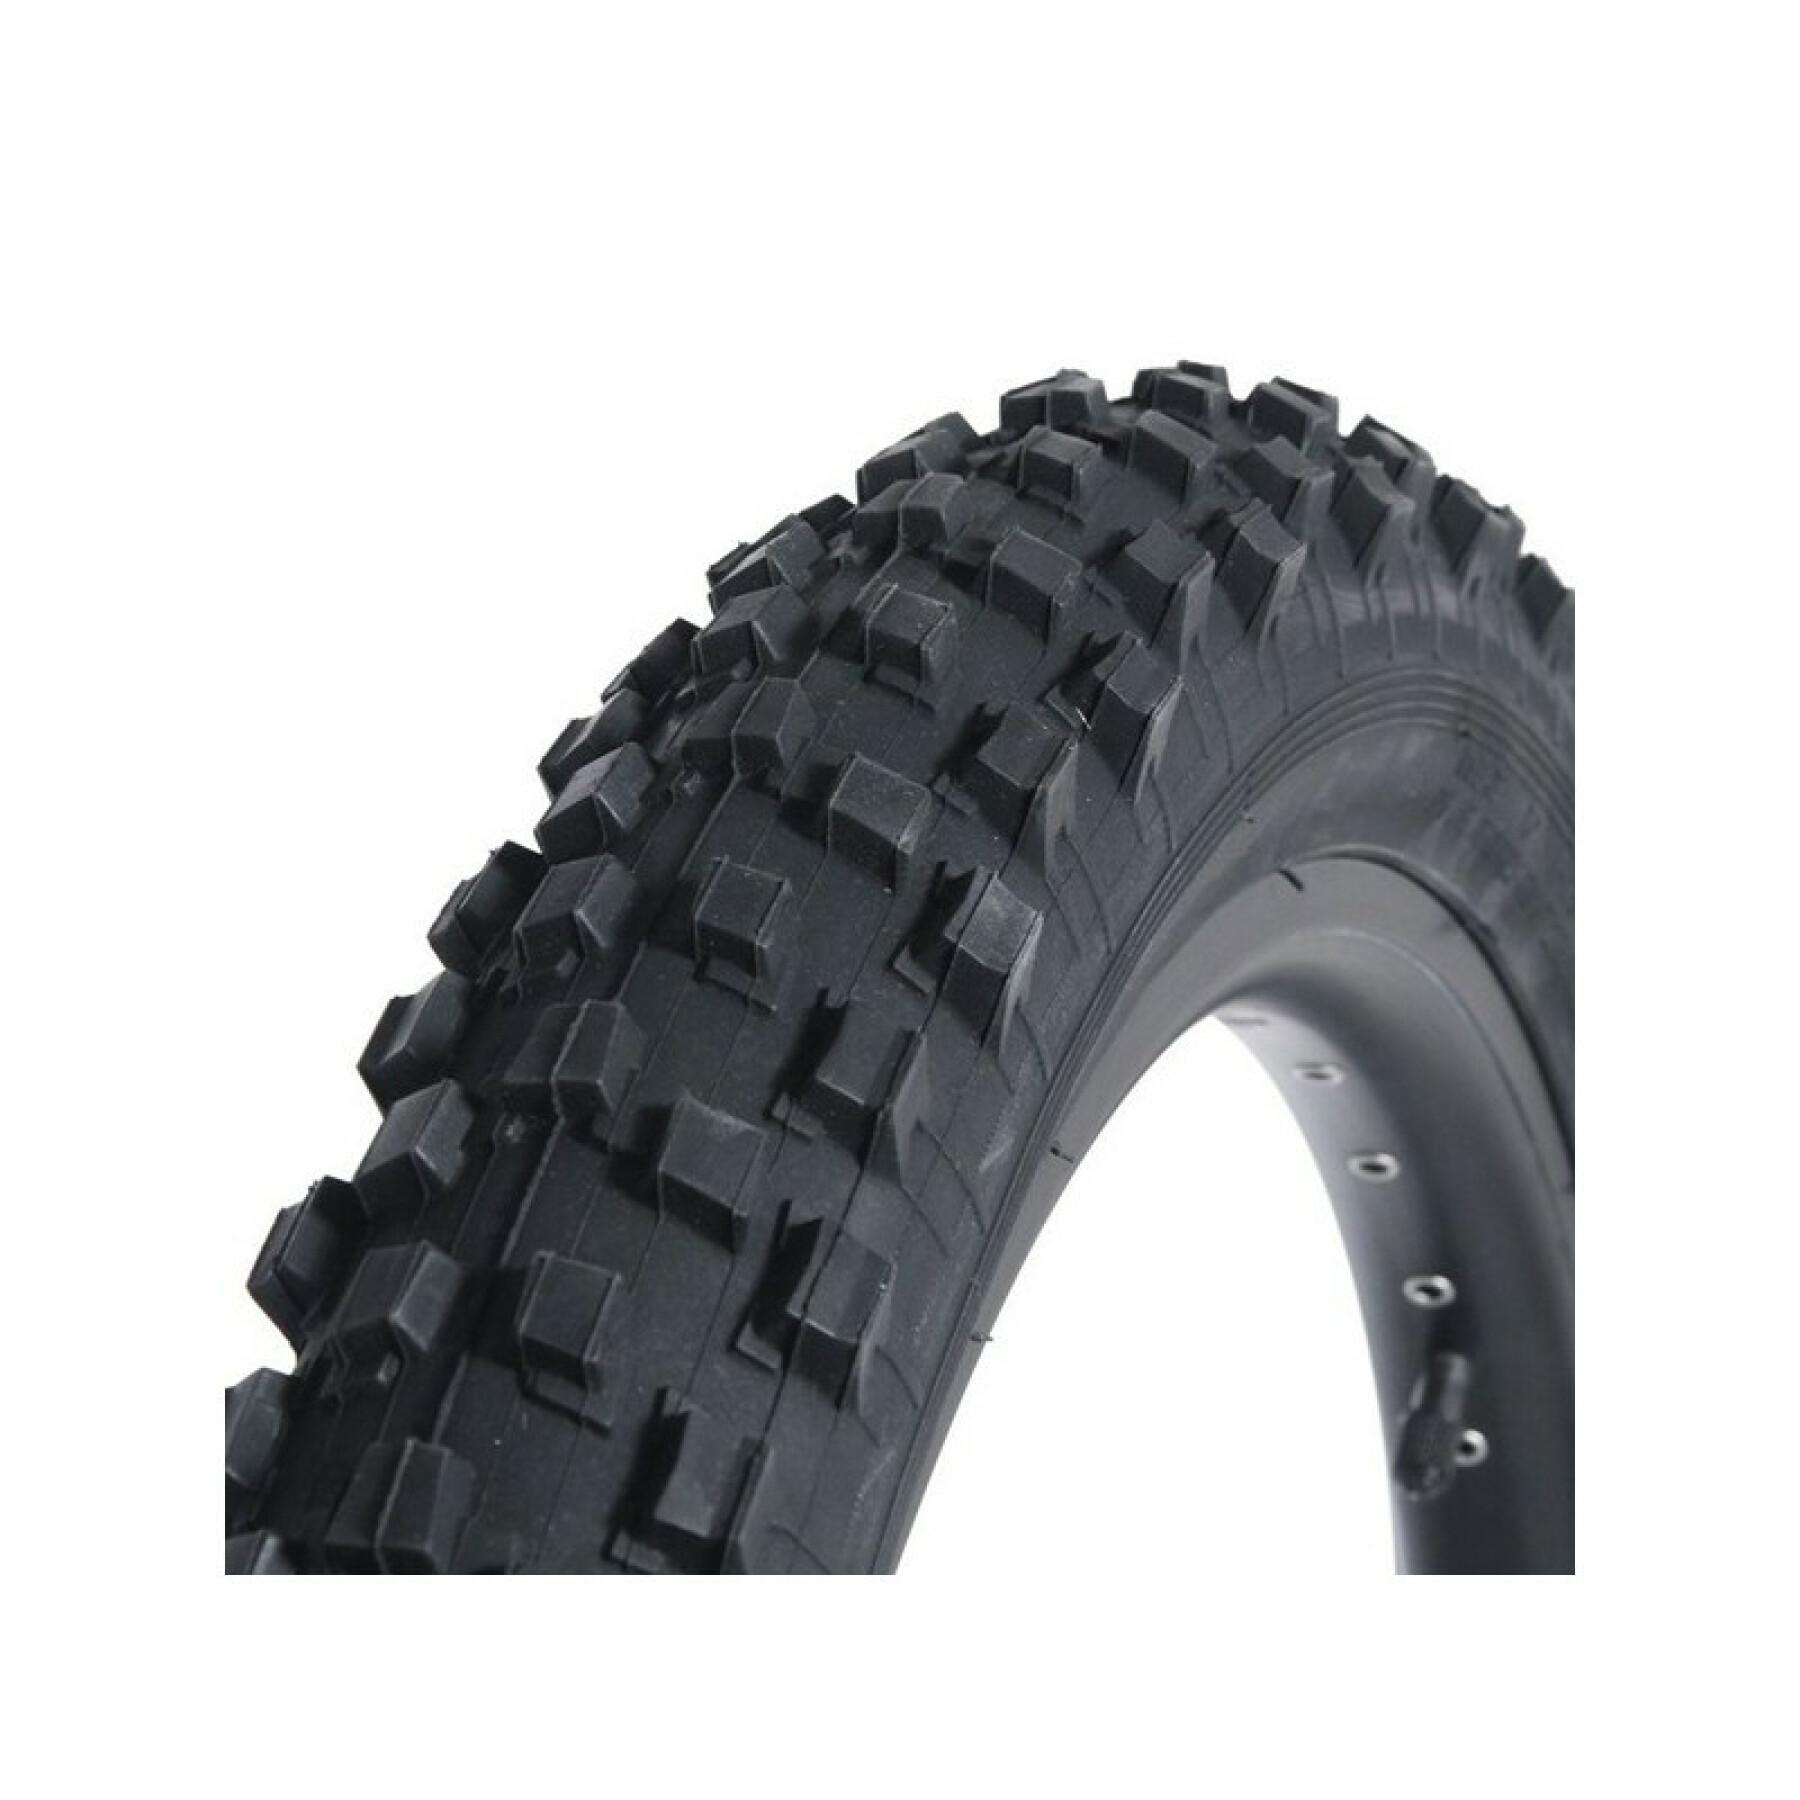 Downhill unicycle tire QU-AX Duro Razorback 75-507